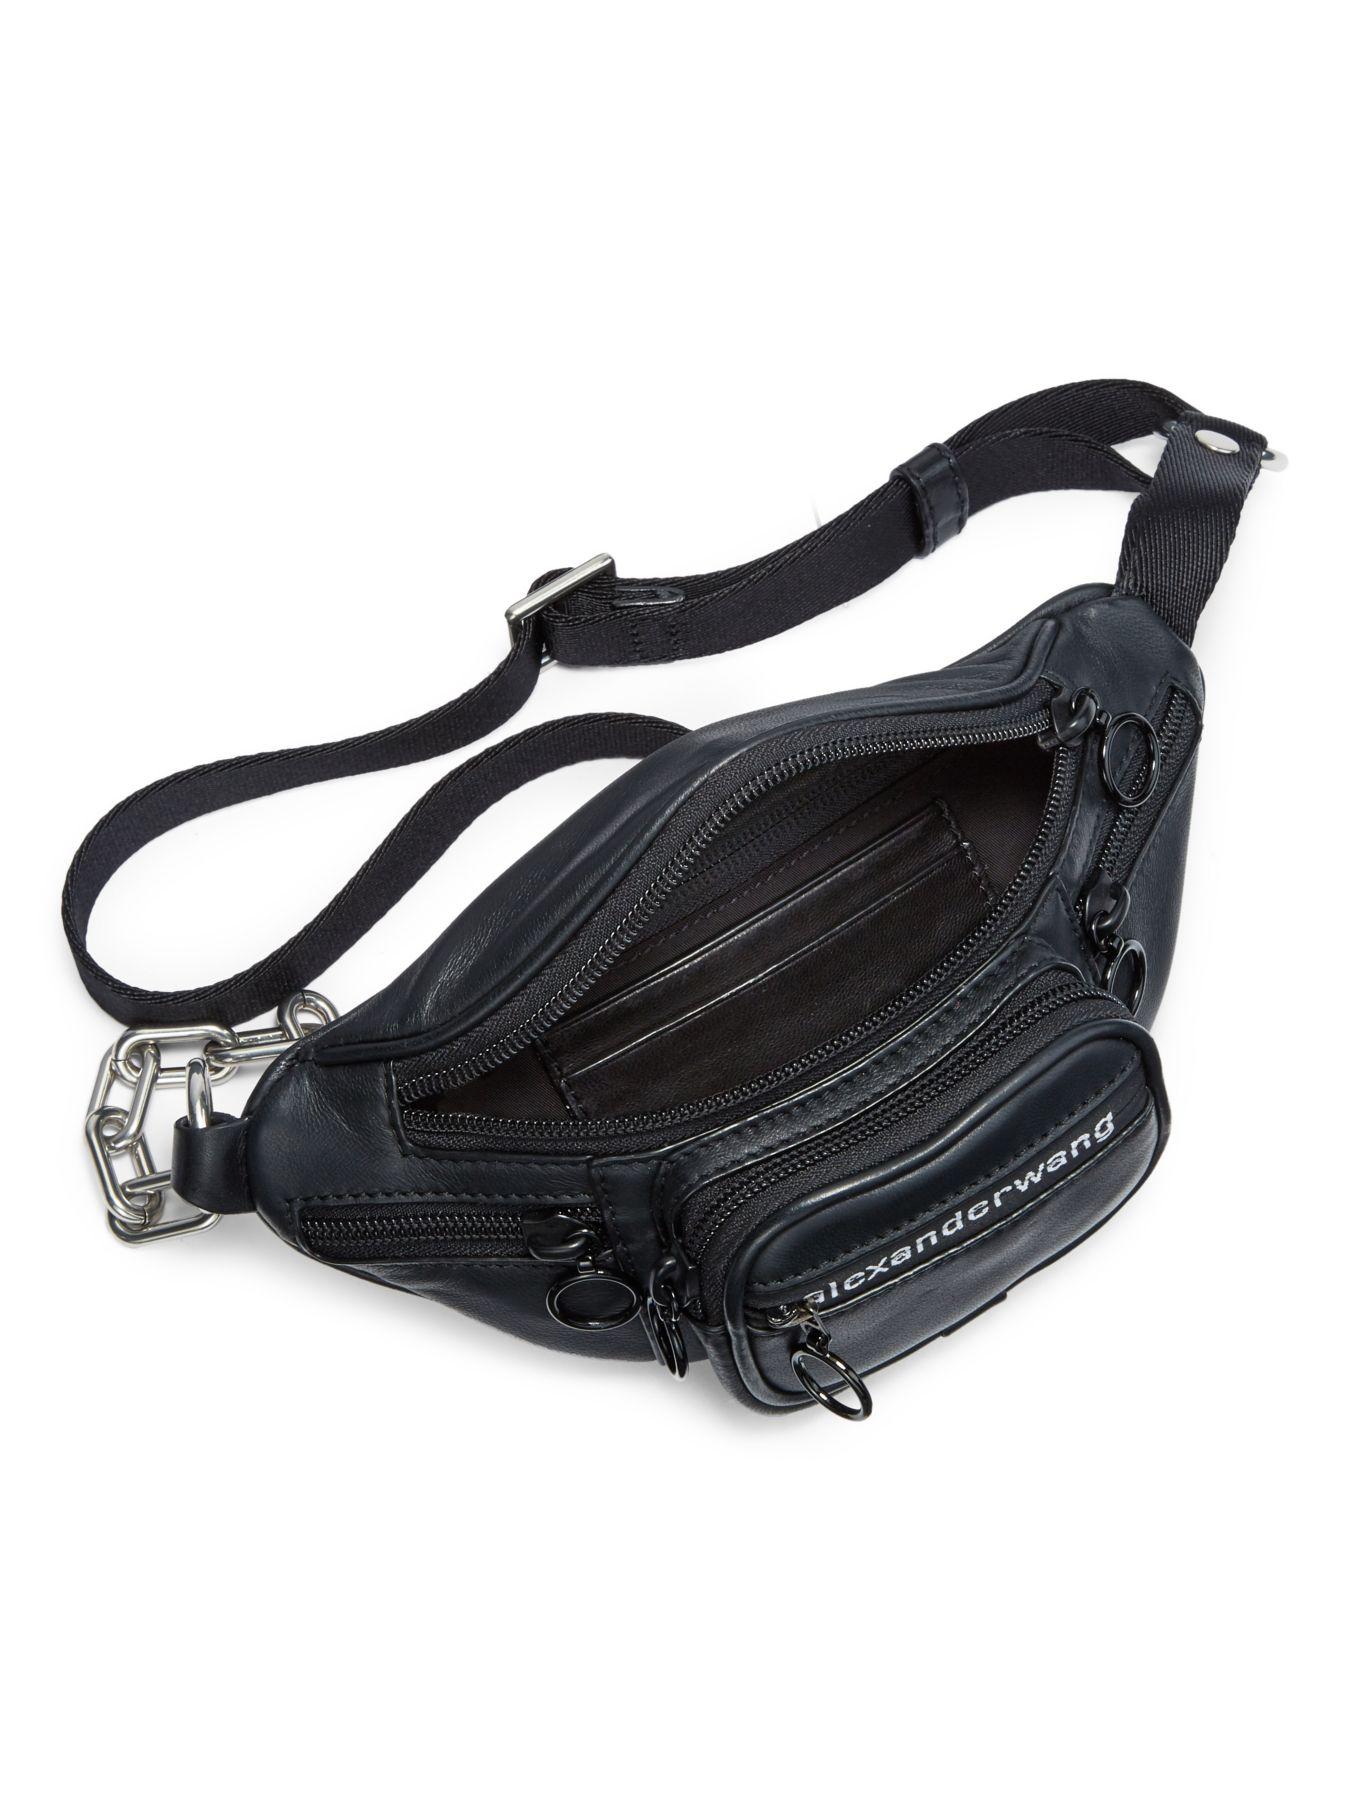 Alexander Wang Mini Attica Leather Chain Convertible Belt Bag in Black - Lyst